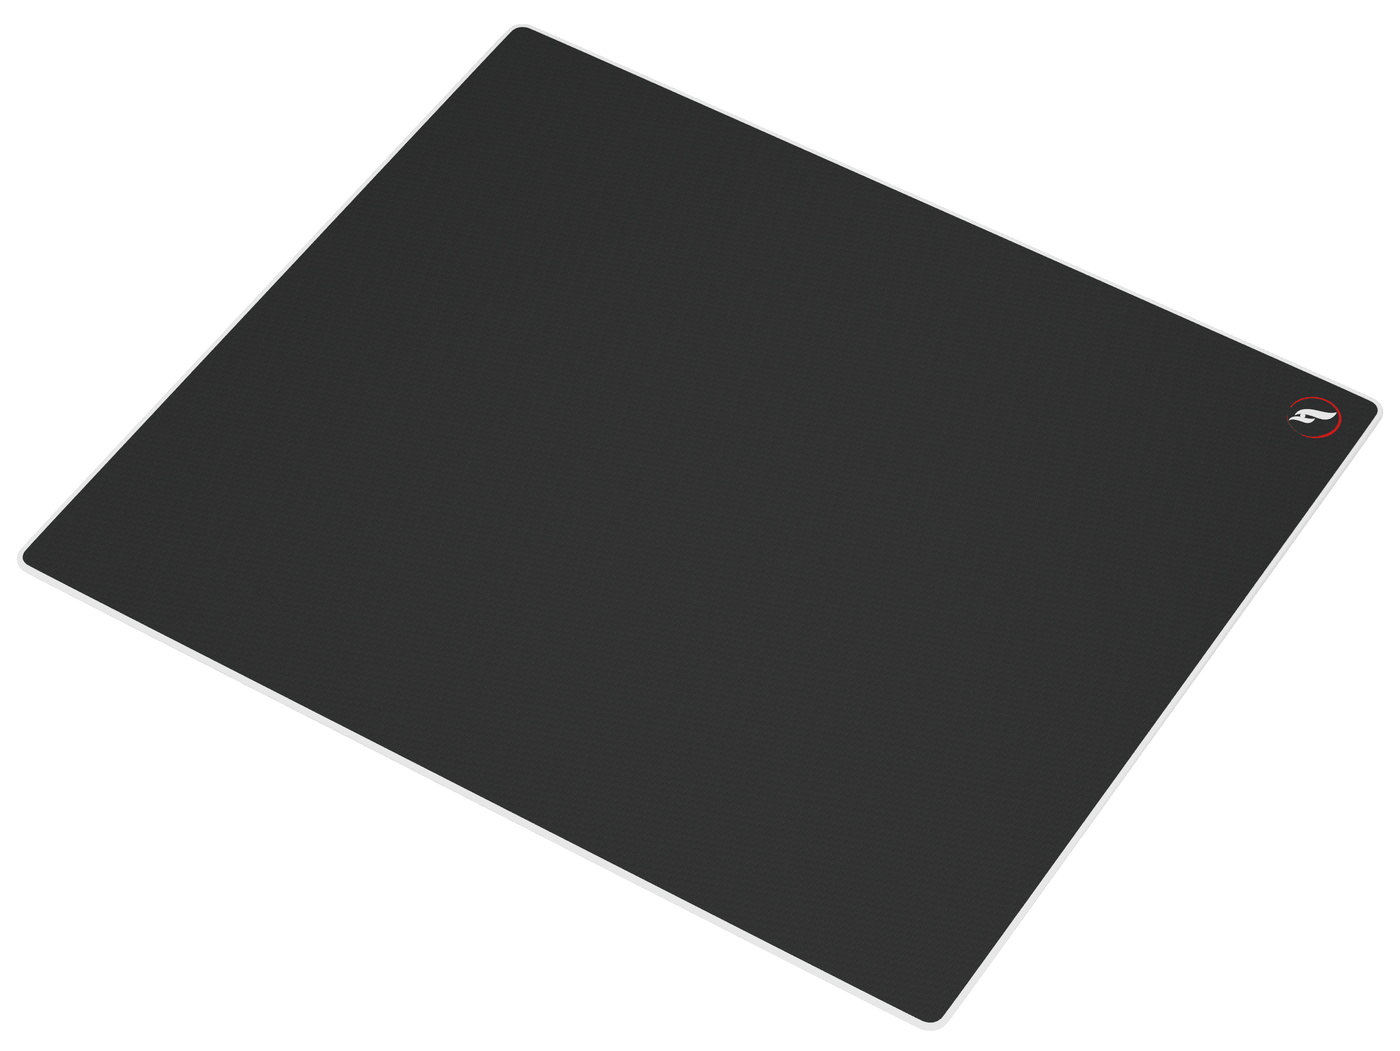 ZeroGravity XL gaming mousepad Black White Edge Angle Odin Gaming